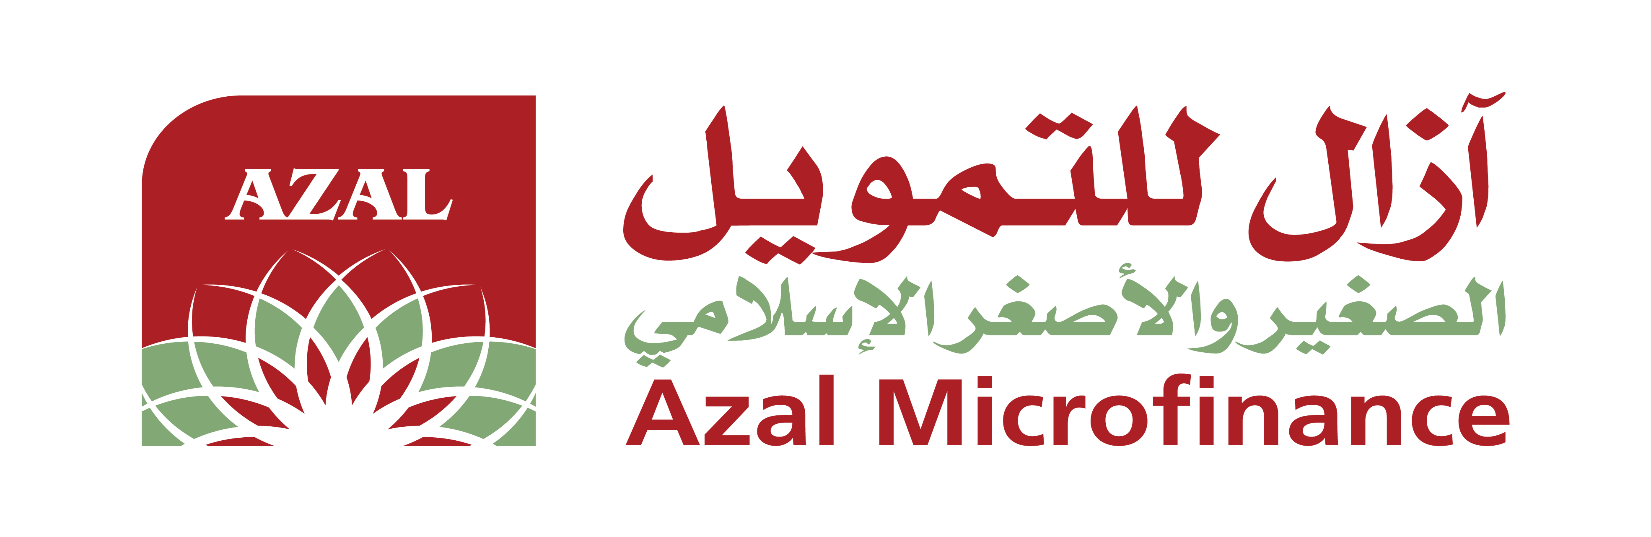 Azal Microfinance